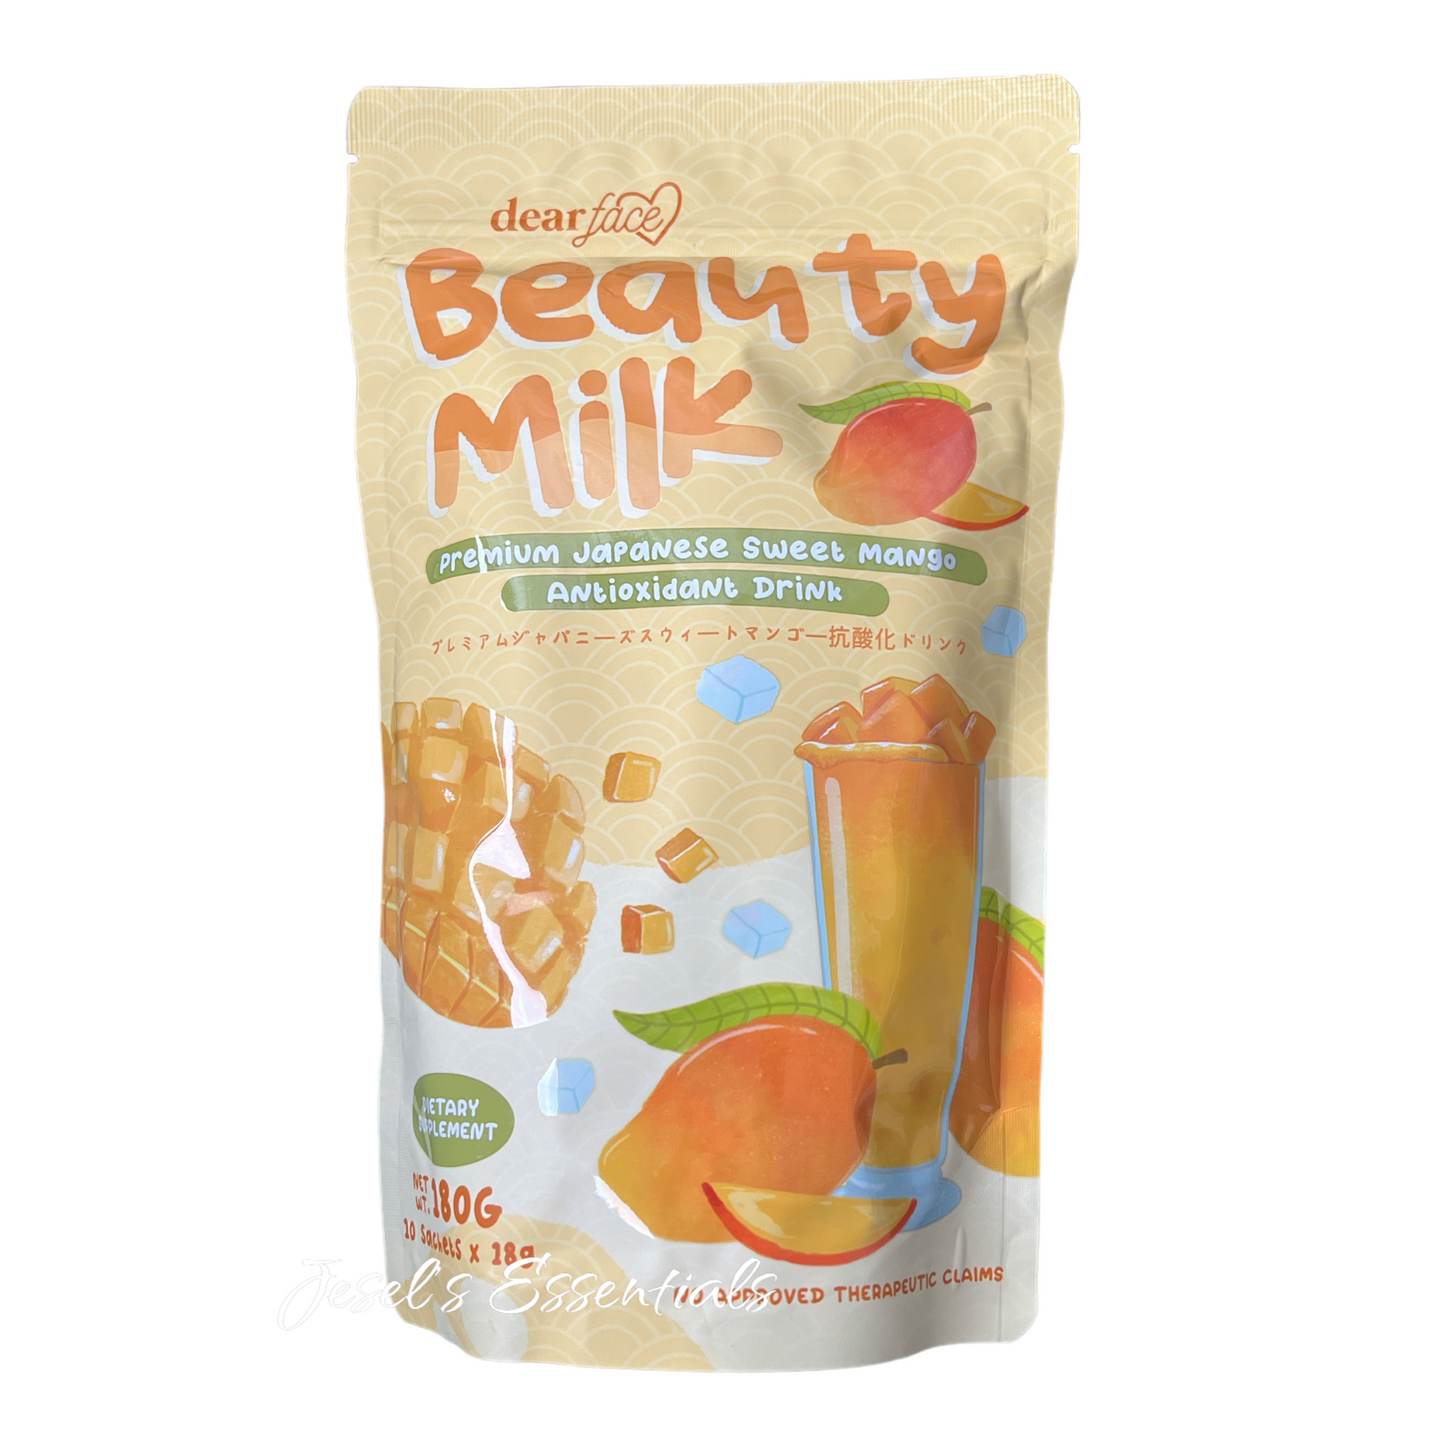 Dear Face Beauty Milk Premium Japanese Mango Anti Oxidant Drink